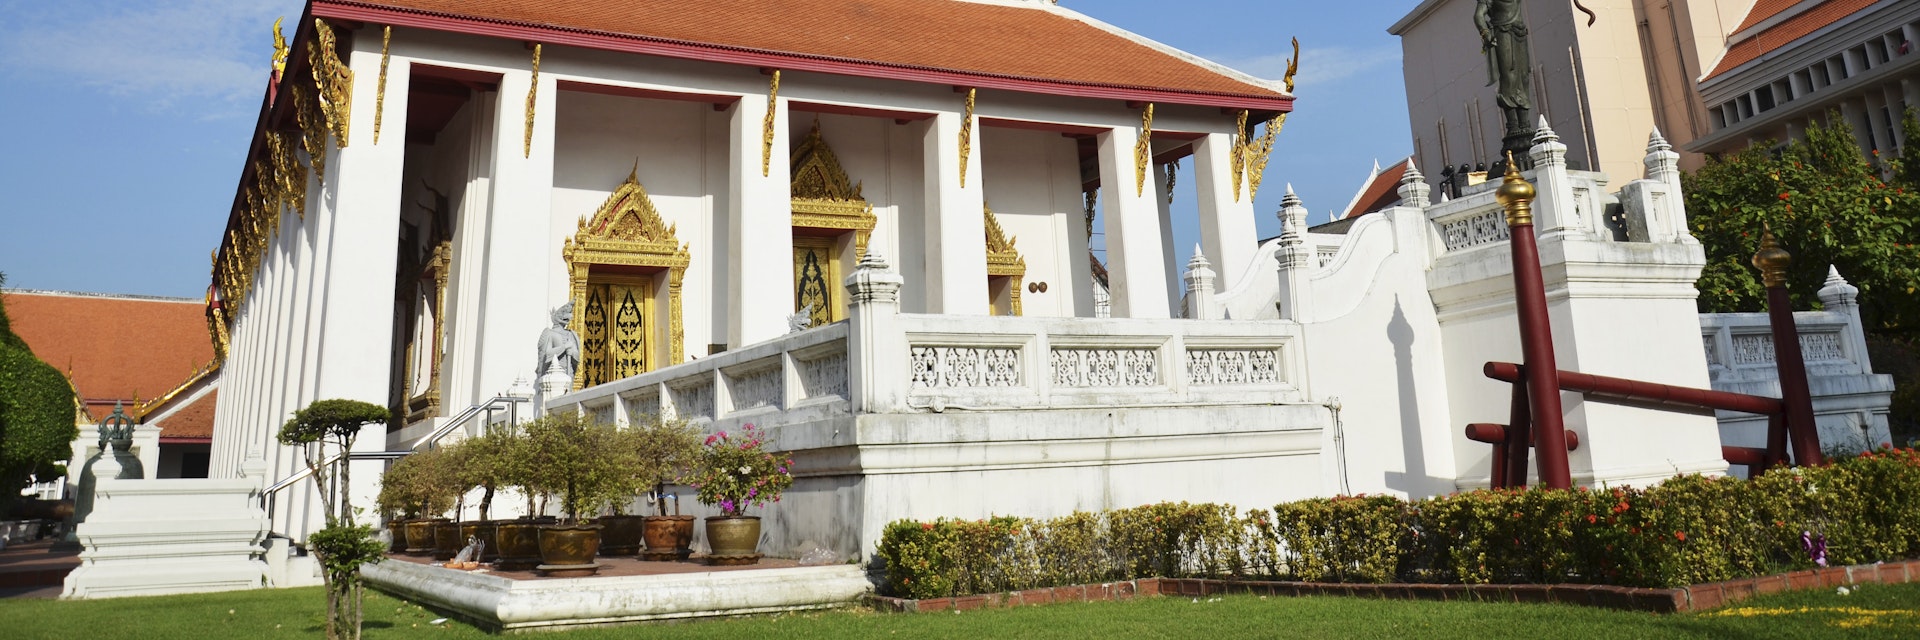 Temple in National Museum Bangkok Thailand